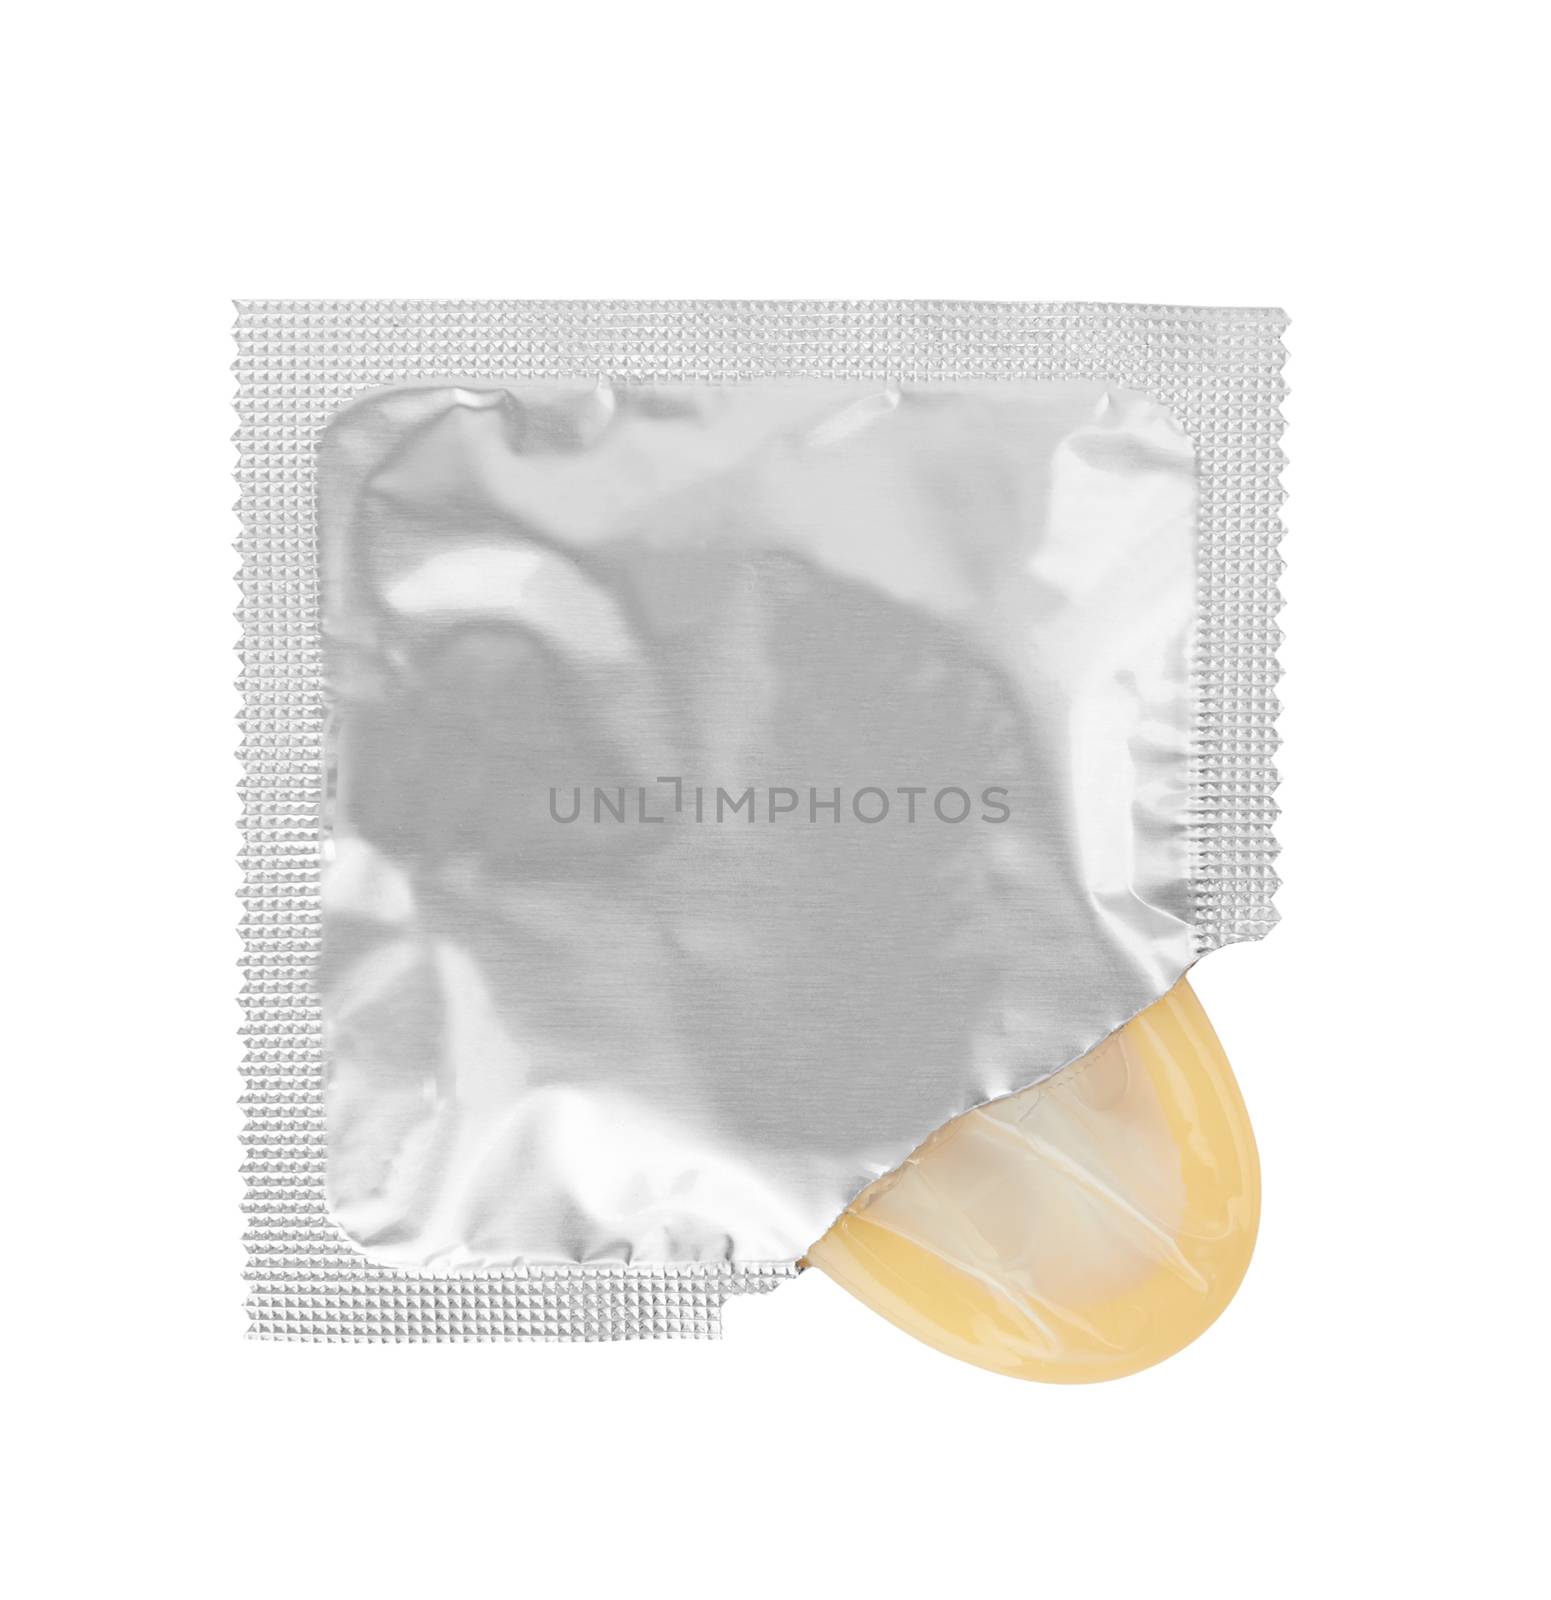 Condom by pioneer111